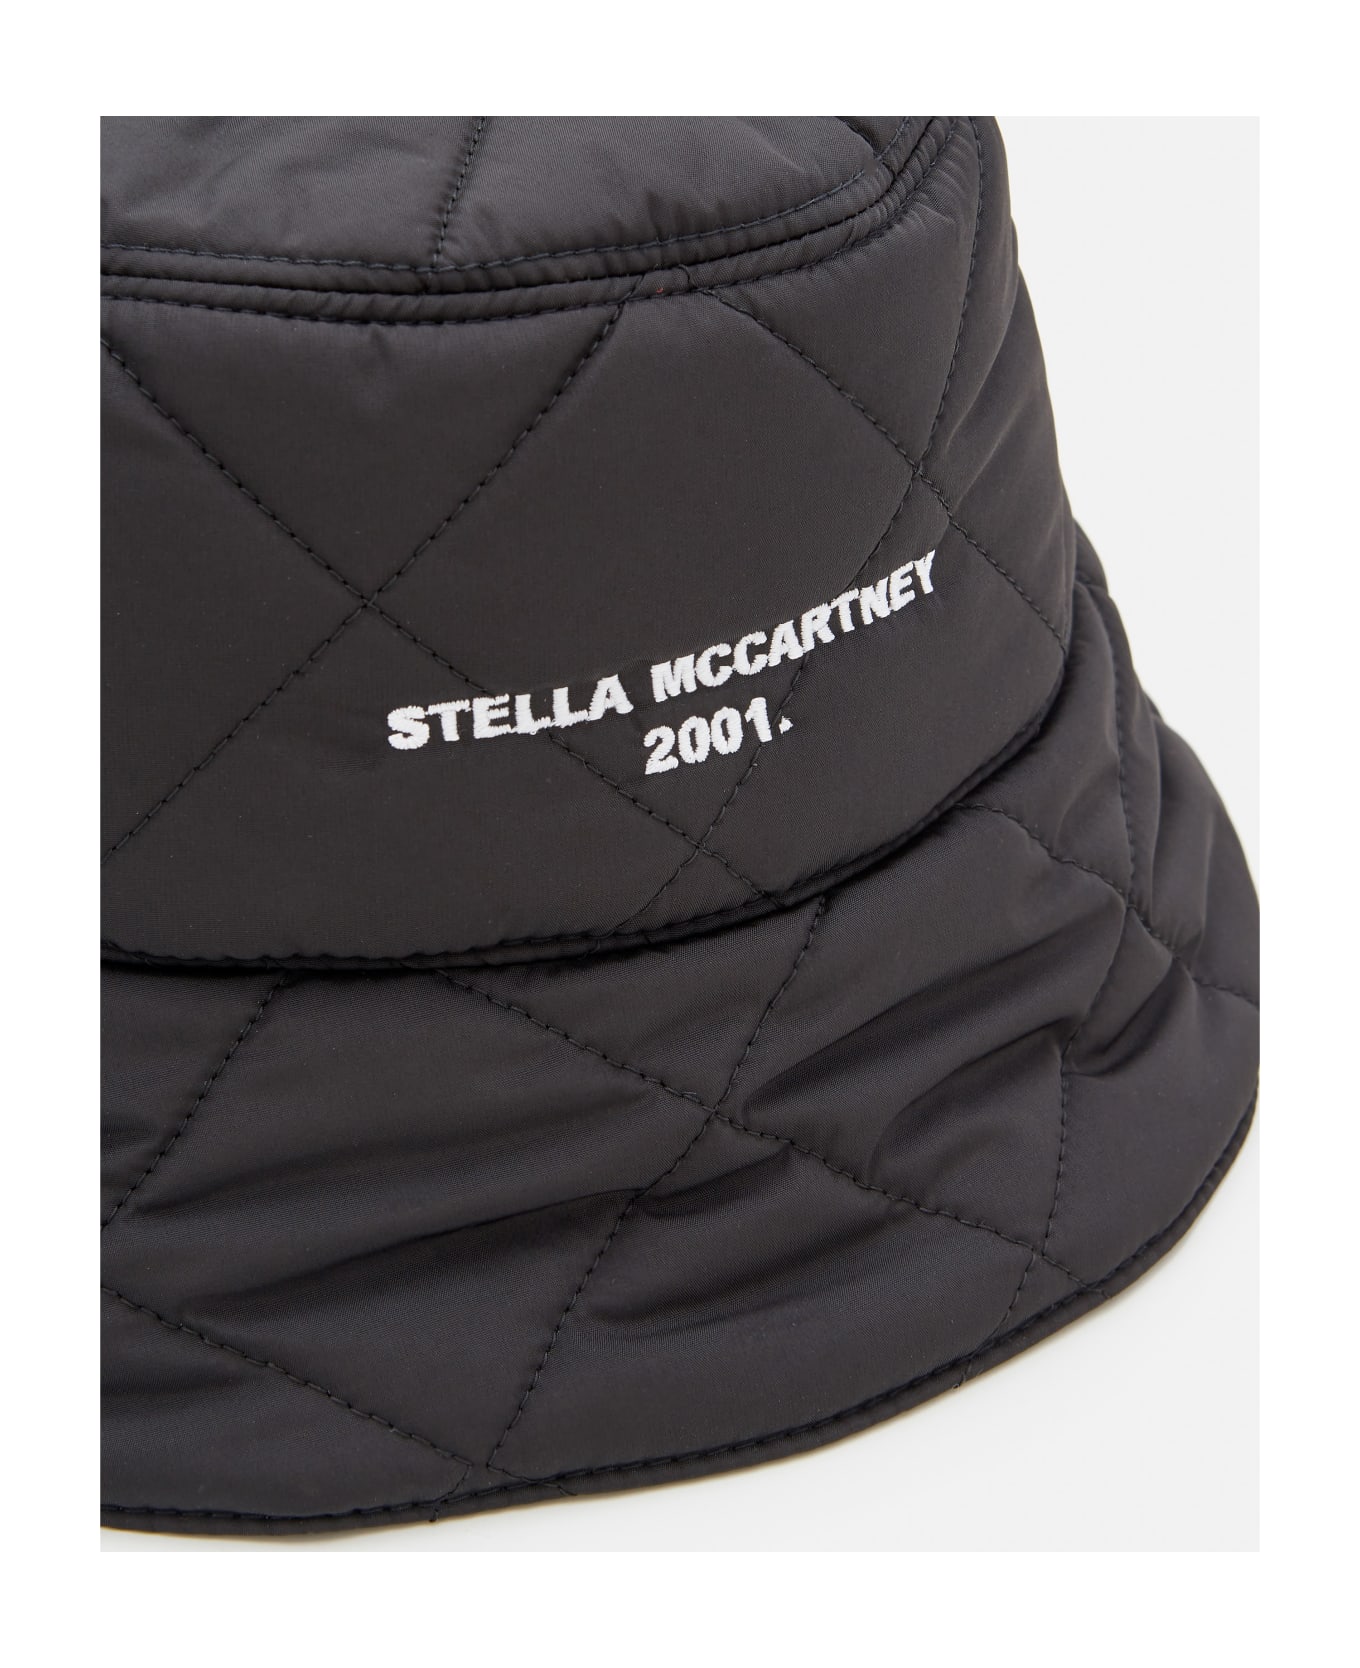 Stella McCartney Quilted Eco Nylon Bucket Hat - Black